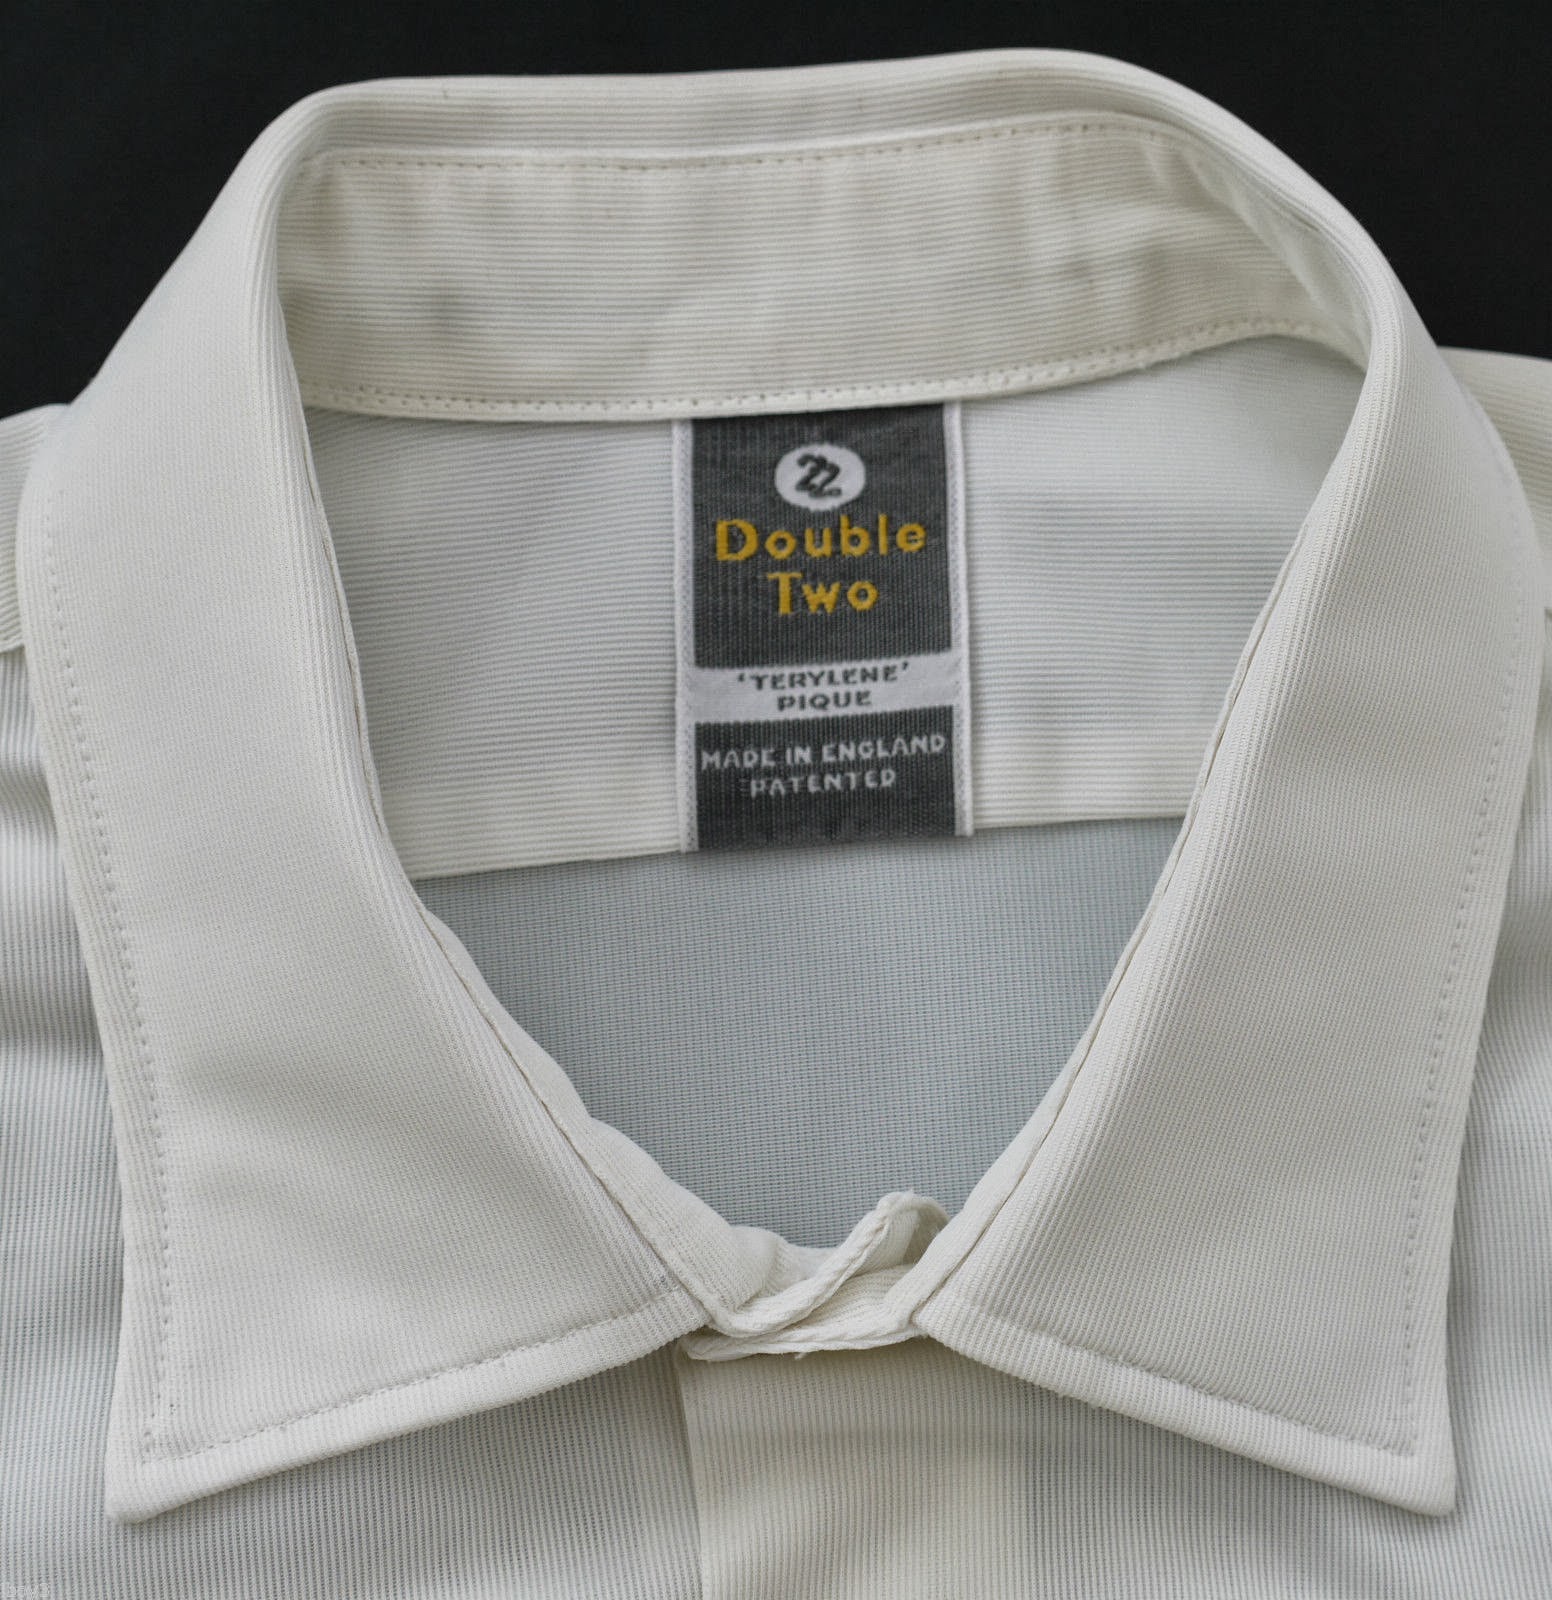 Nylon Shirts: Rare 60's Vintage Double Two Smooth British Terylene